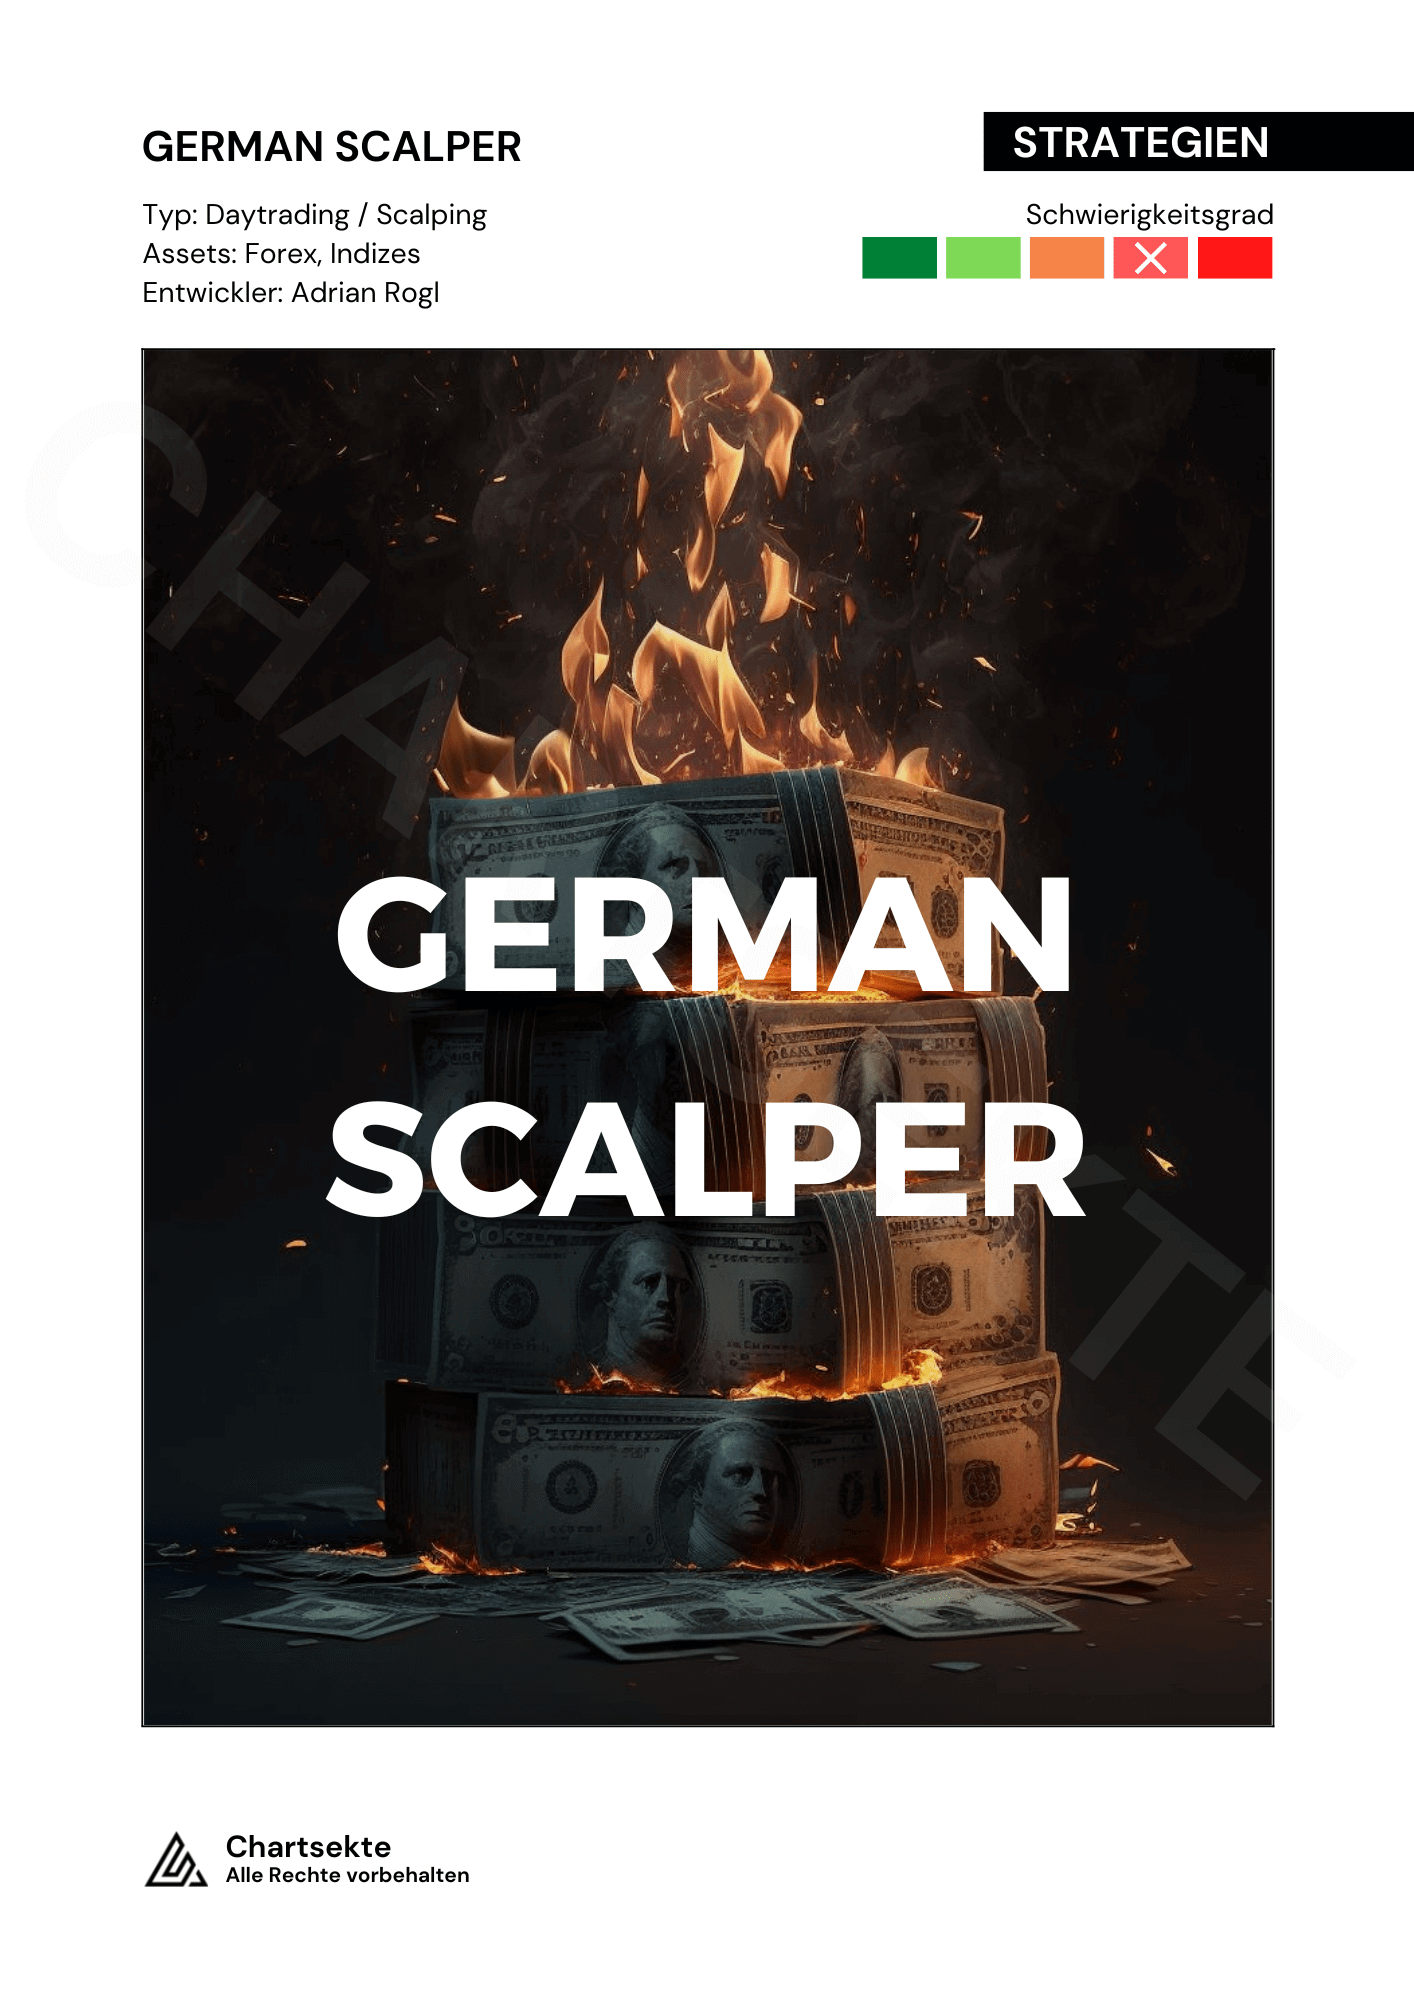 German Scalper Strategie